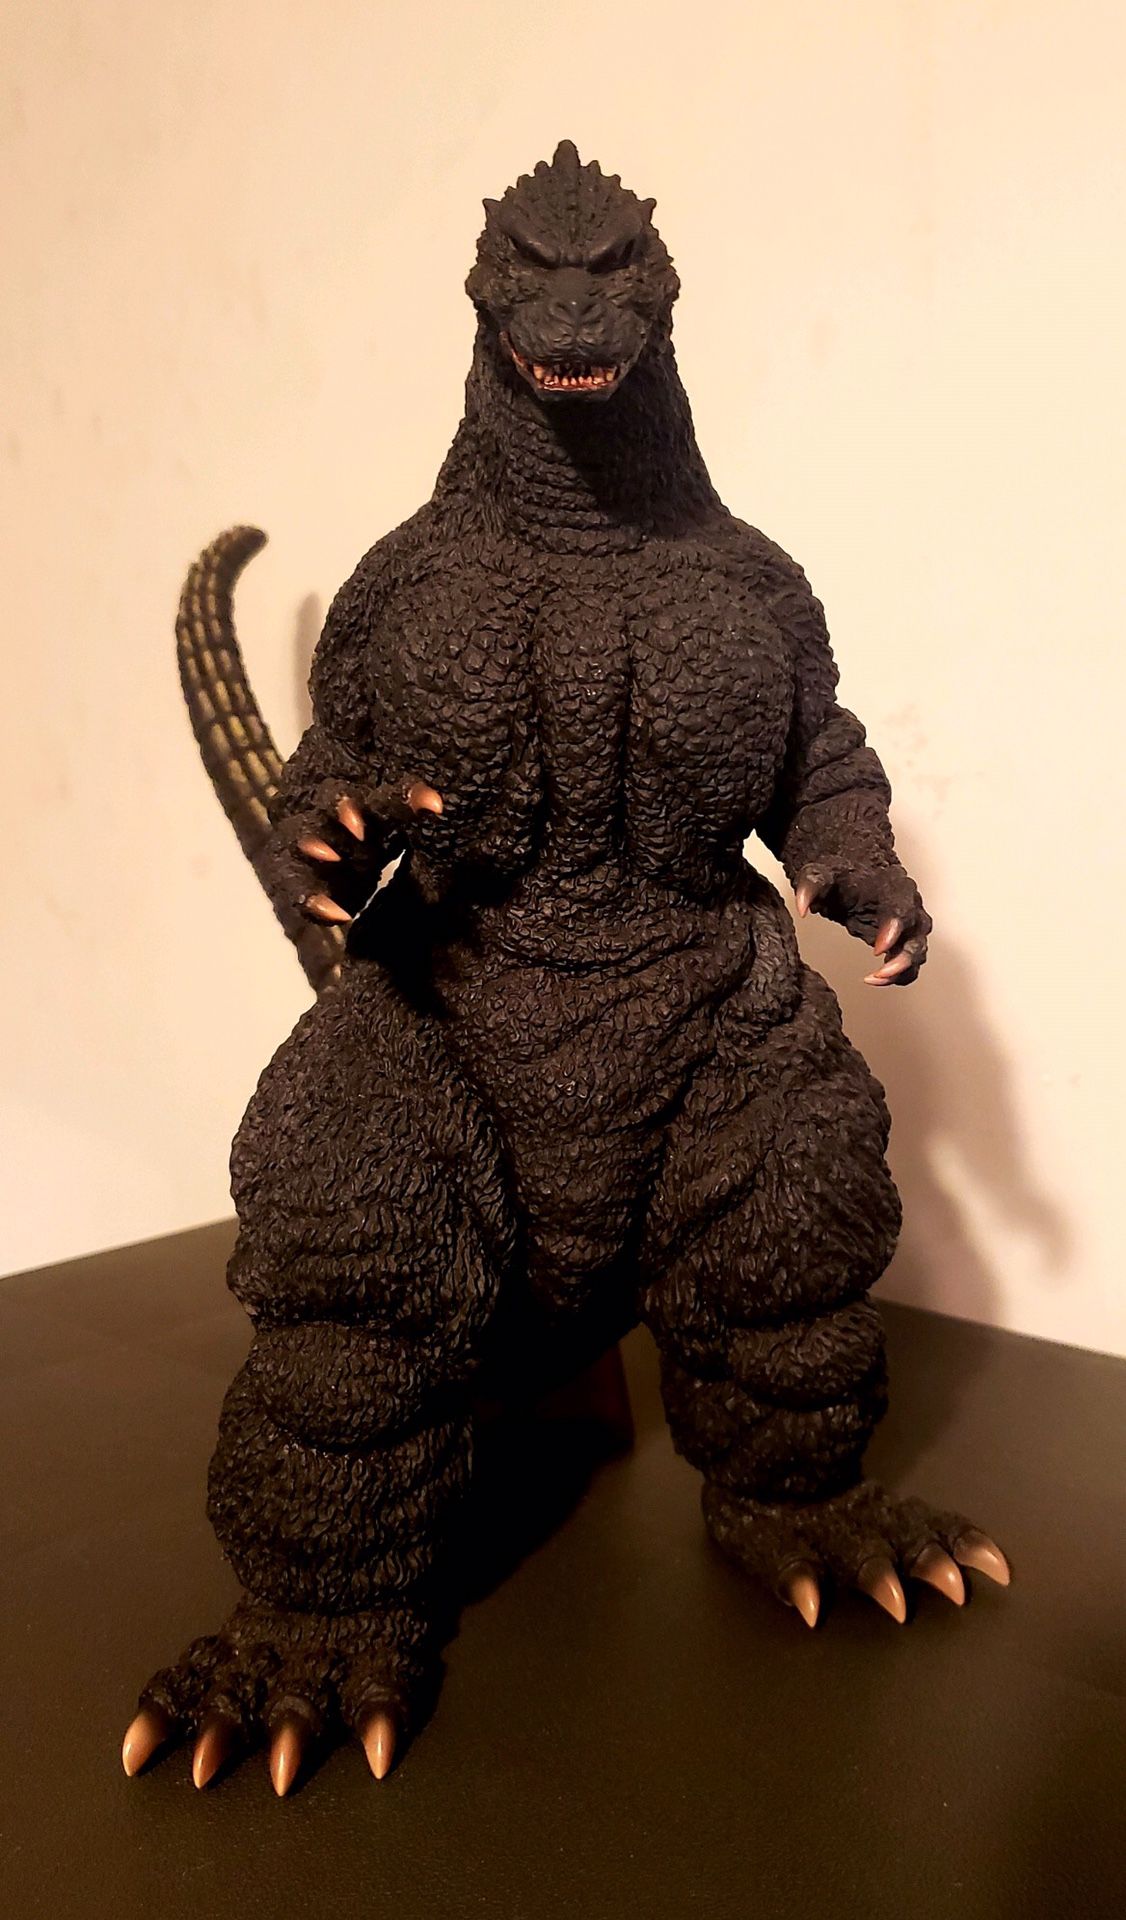 X-Plus Godzilla 1991 Figure / Toy